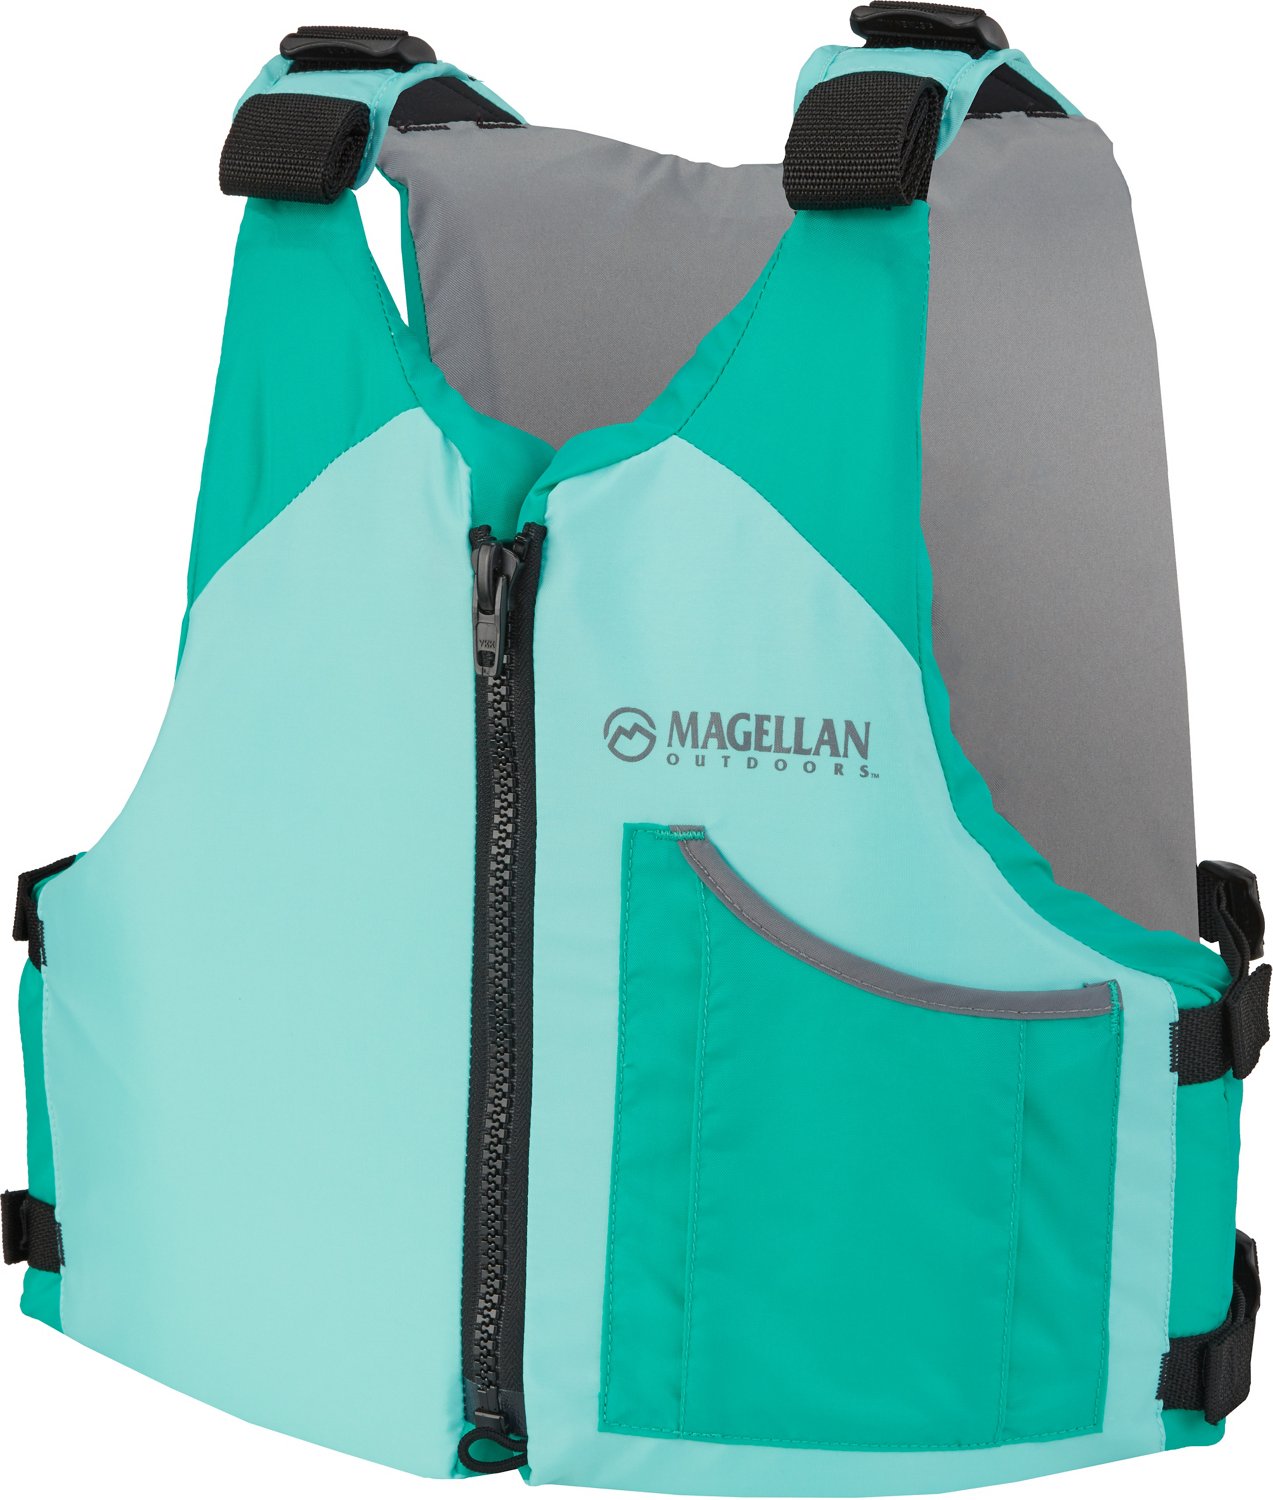 Magellan Outdoors, Jackets & Coats, Magellans Travel Gear Fishing Jacket  Xxl Green Convert To Vest Pockets